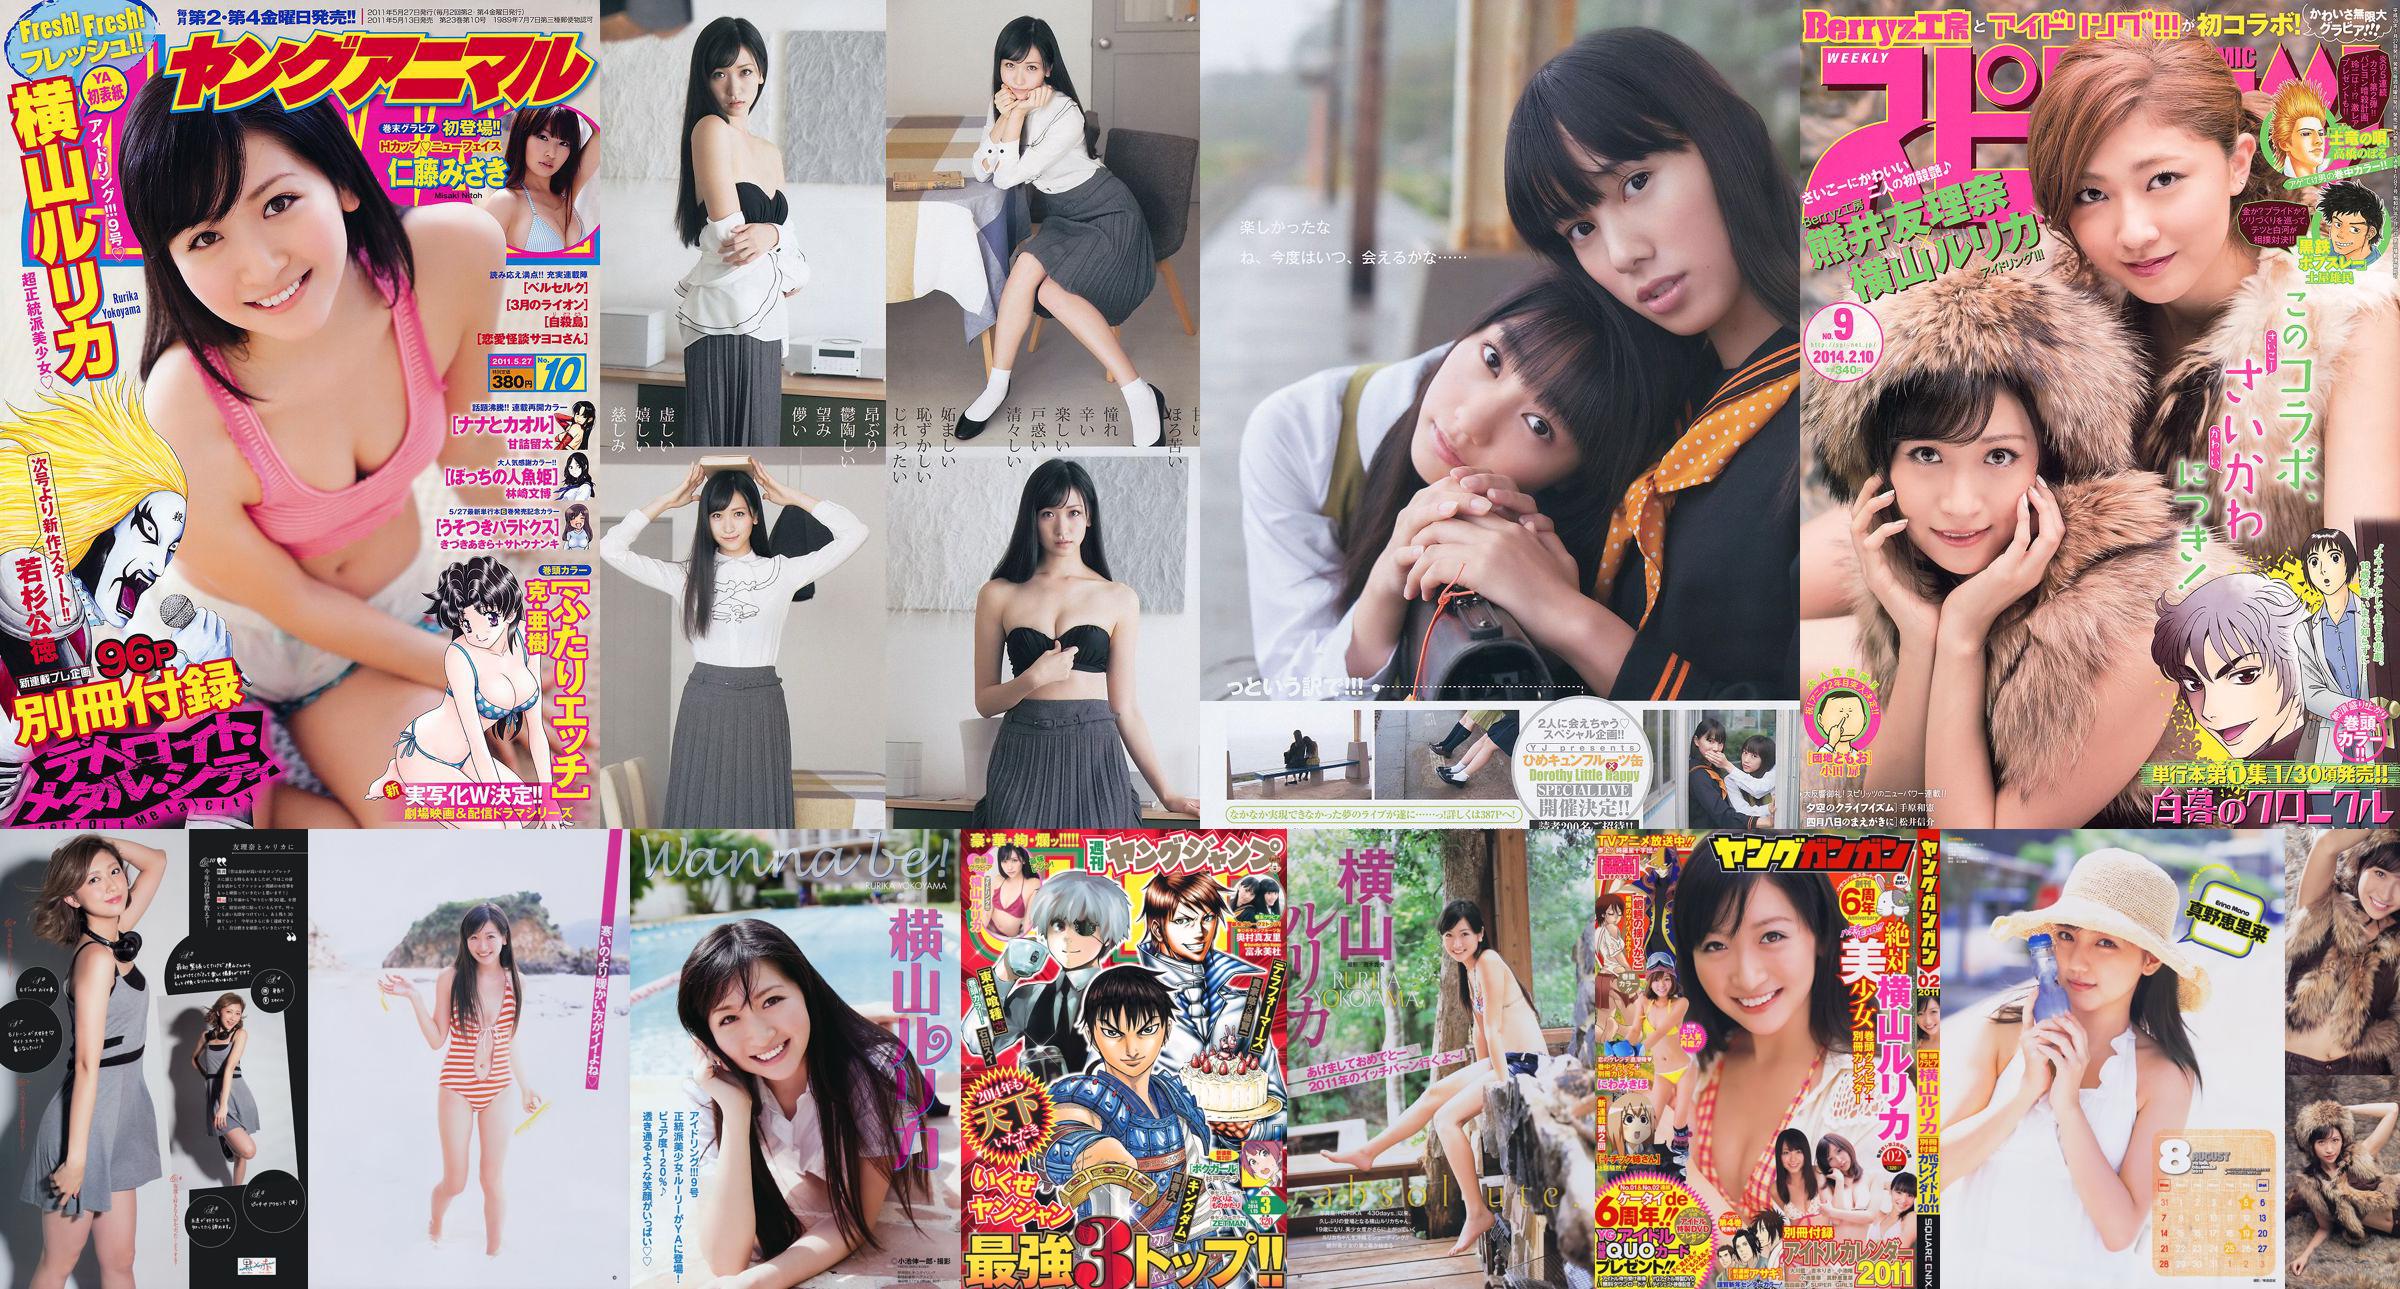 [Grands esprits de la bande dessinée hebdomadaire] Yokoyama Rurika Kumai Yurina 2014 Magazine photo n ° 09 No.2cb9e5 Page 1